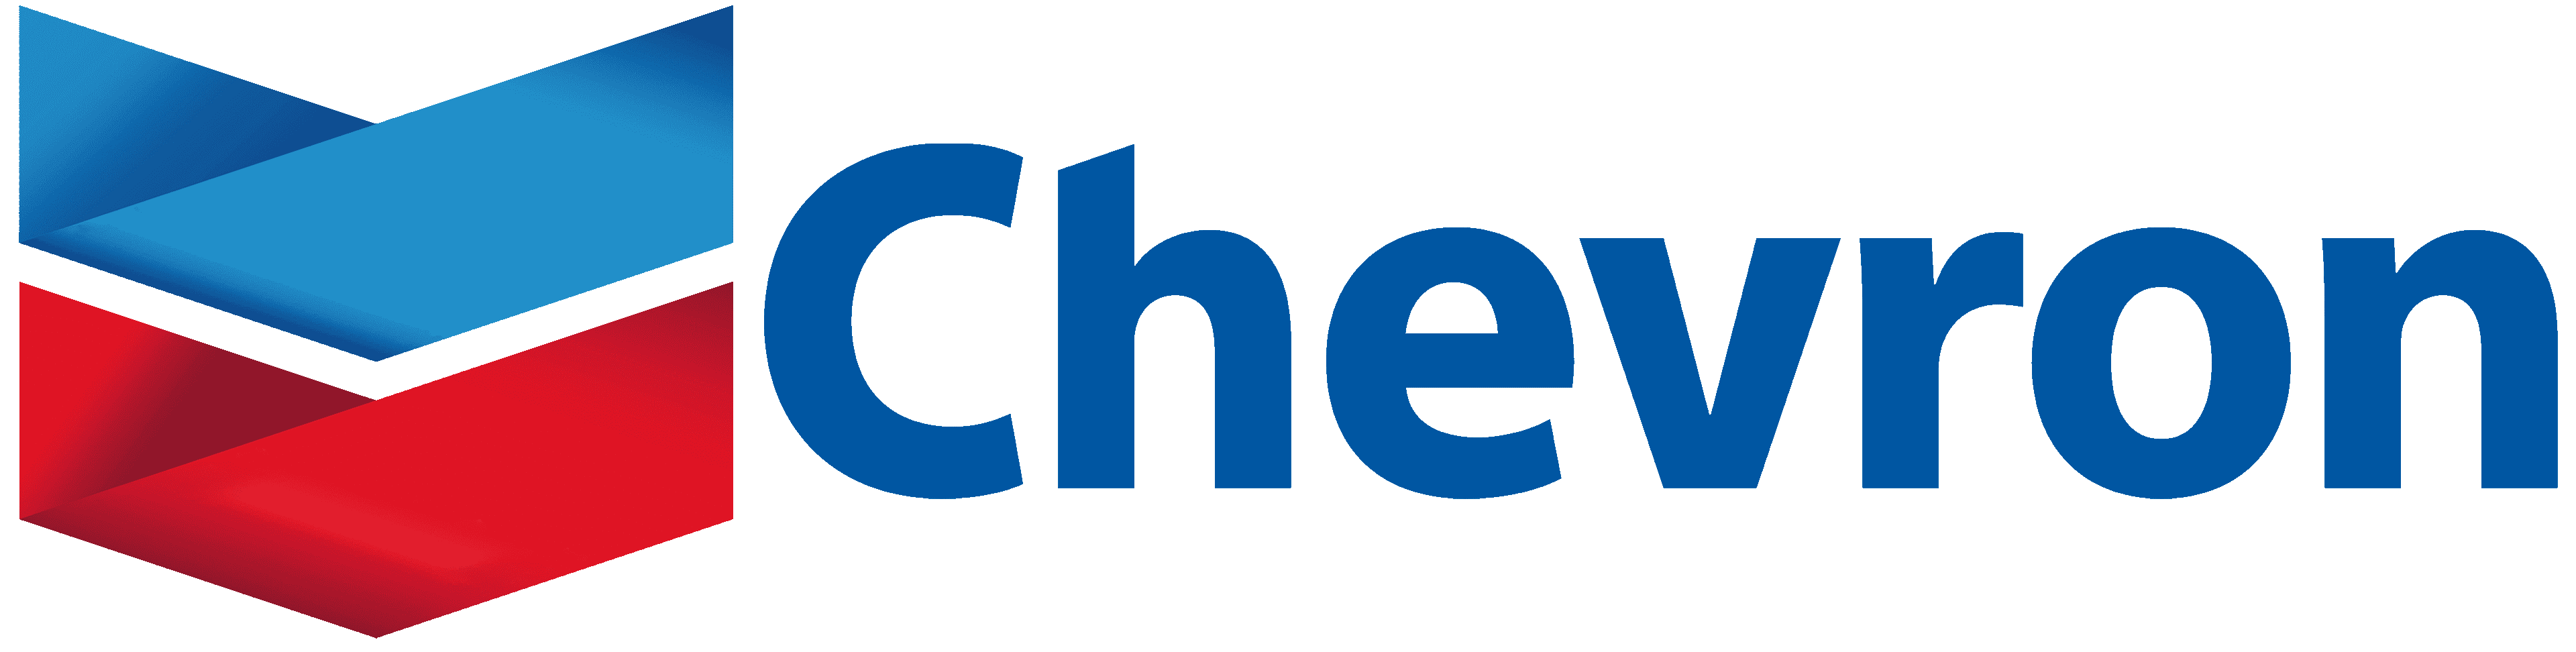 Chevron Technology Ventures